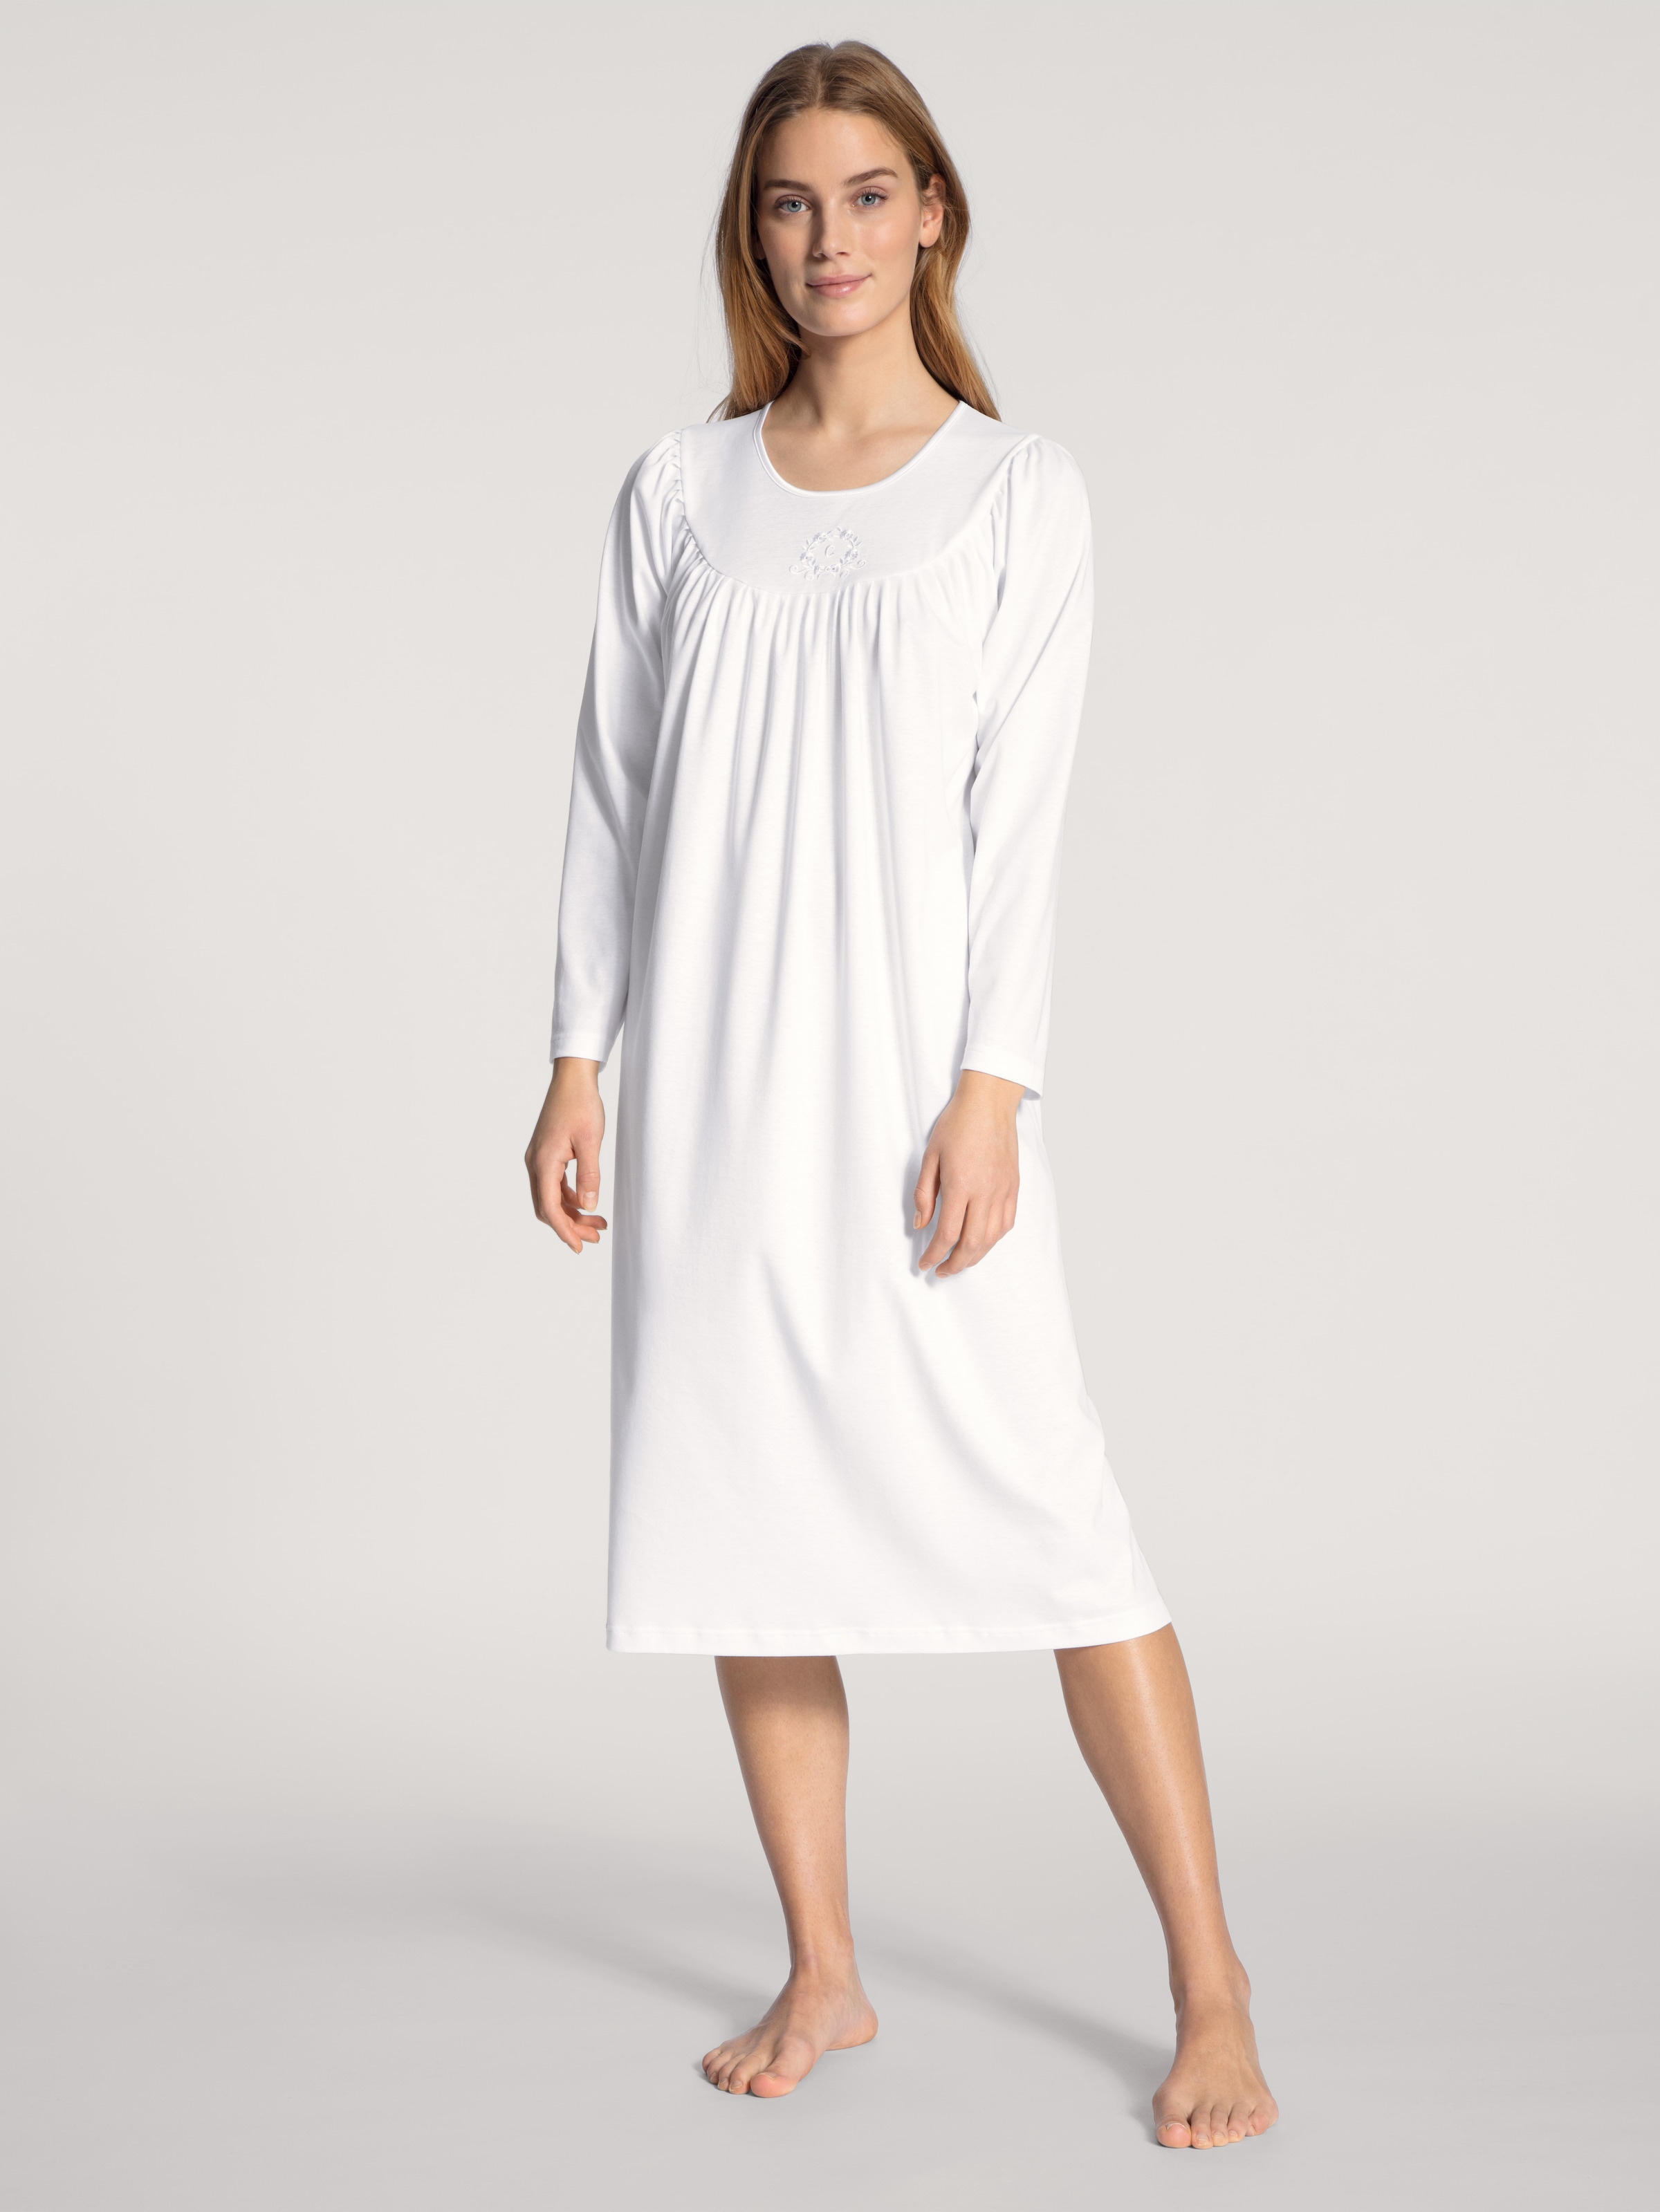 Cotton«, Comfort OTTO Shop Schlafhemd ca. CALIDA Online lang, 110 Fit, im Nachthemd »Soft cm Raglanschnitt